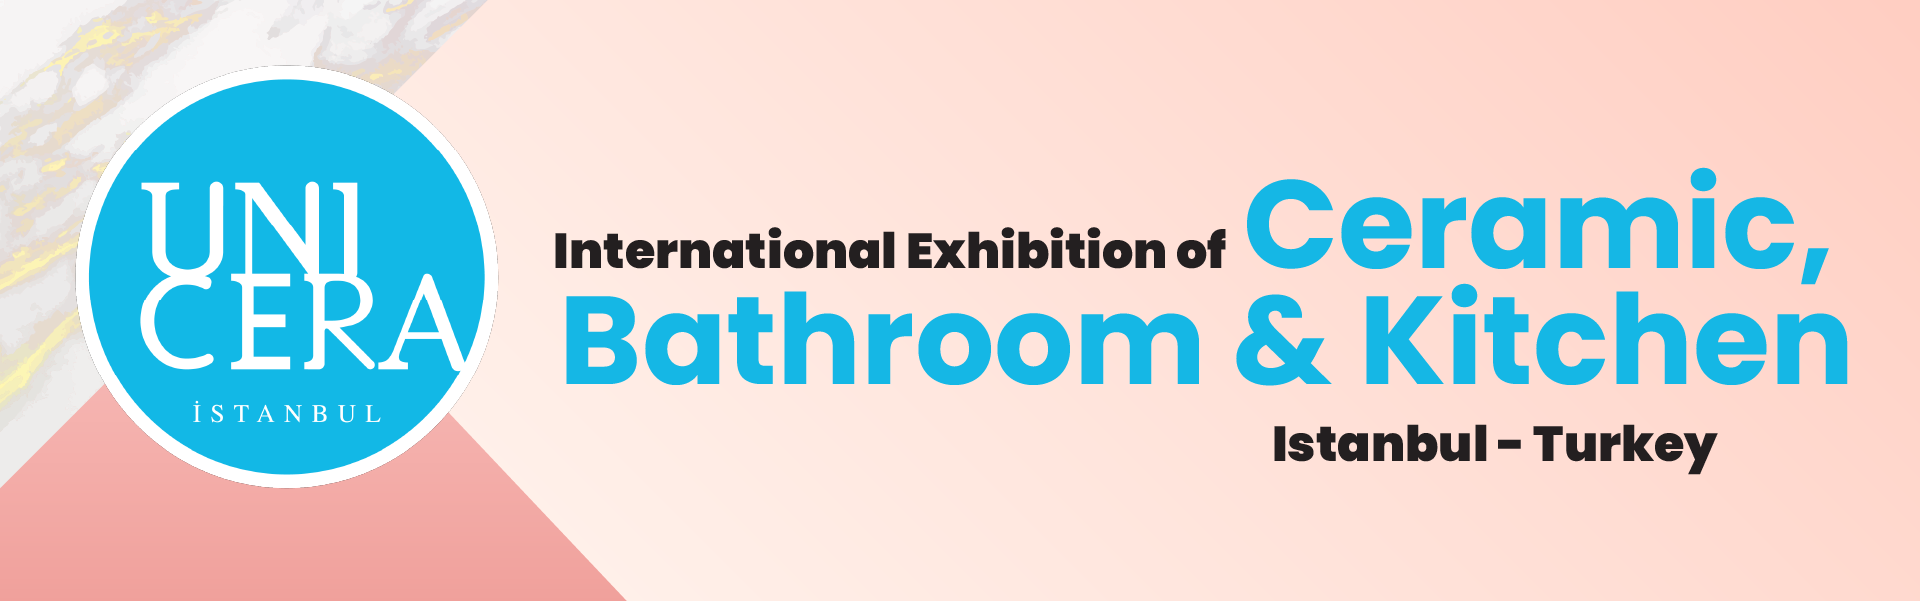 Istanbul Ceramic Bathroom and Kitchen Exhibition